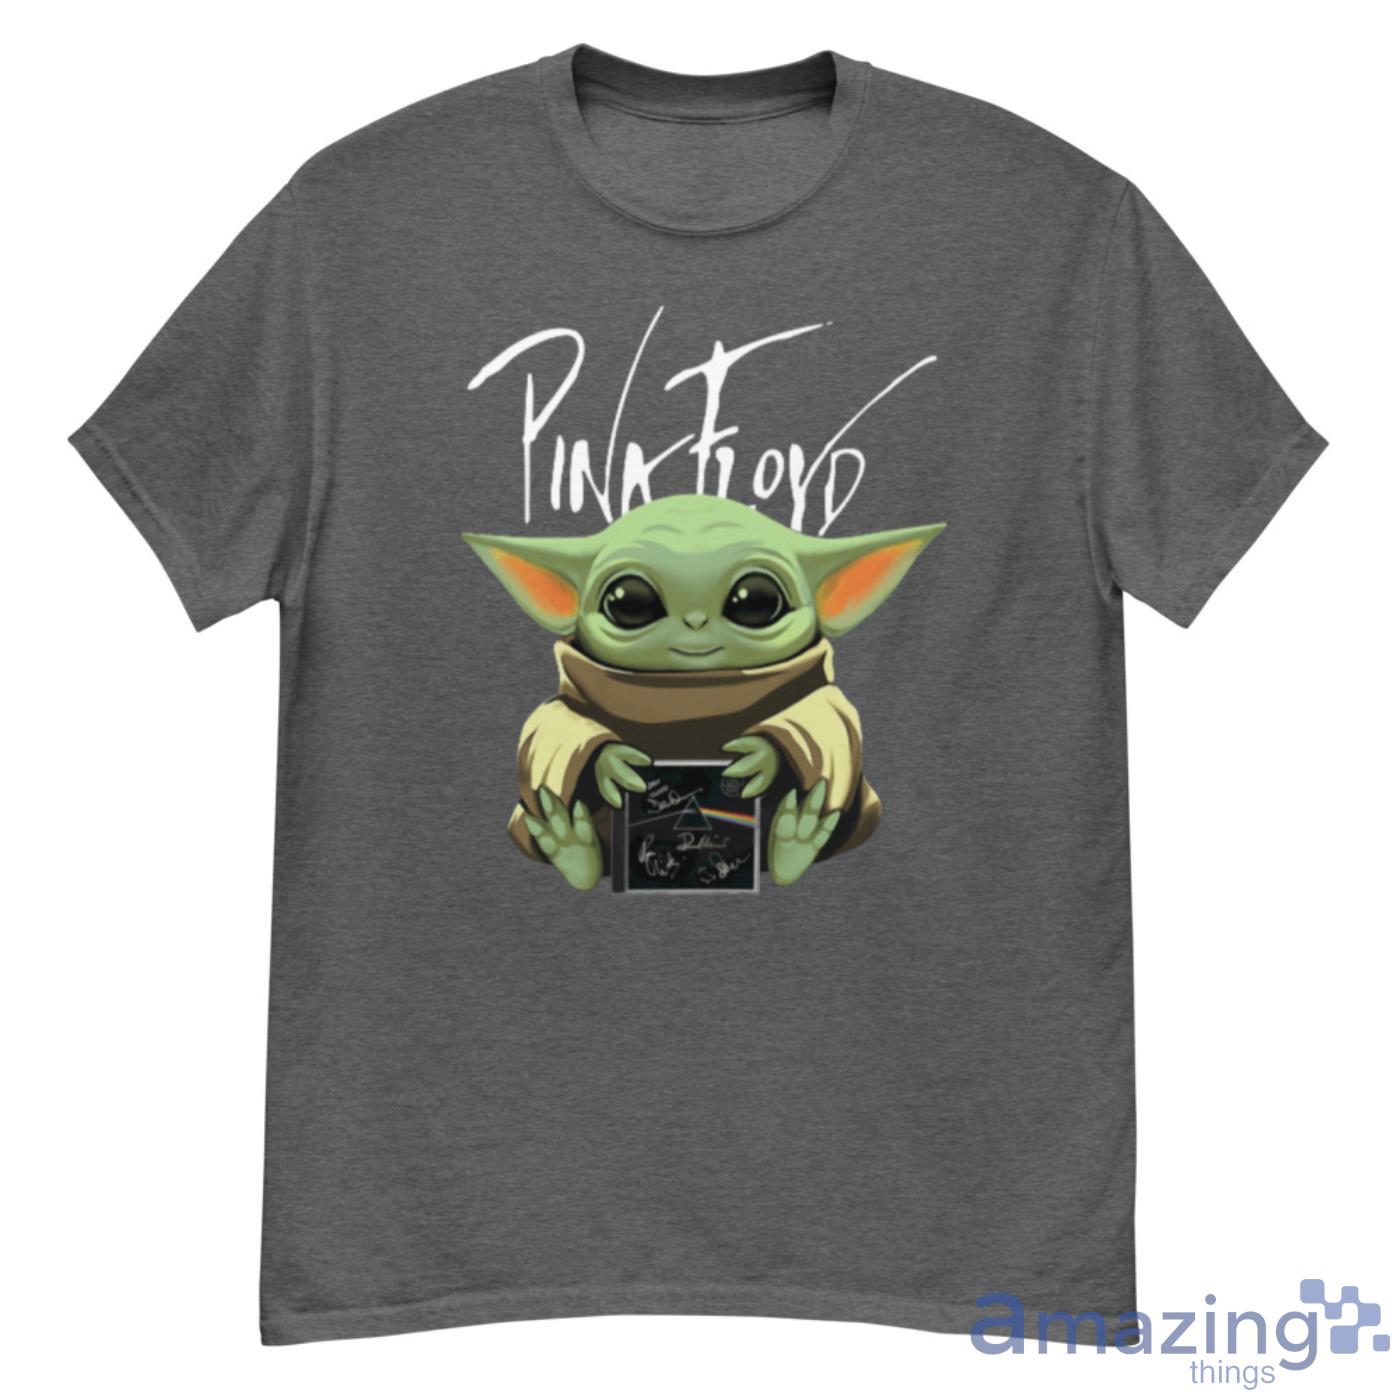 Baby Yoda Hug Woodford Reserve Star Wars Shirt - Thefirsttees